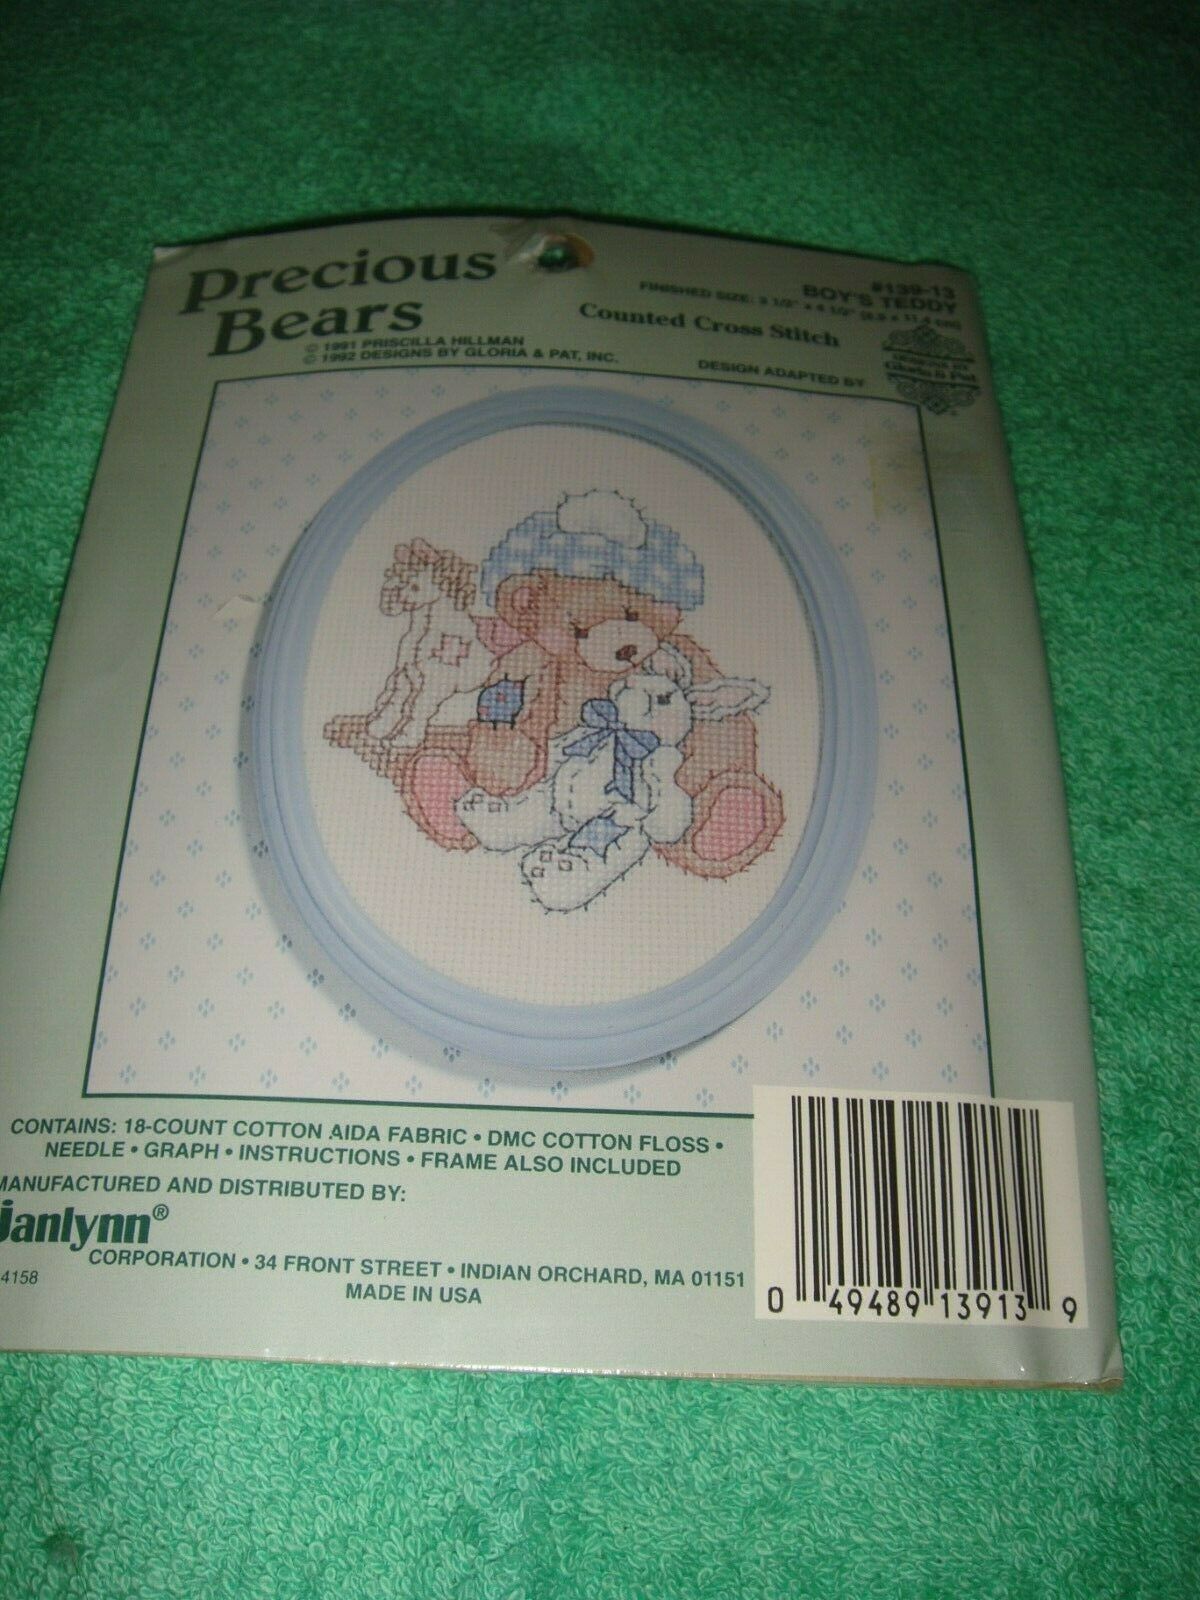 Primary image for Boy's Teddy By Janlynn By Precious Bears Cross Stitch Kit